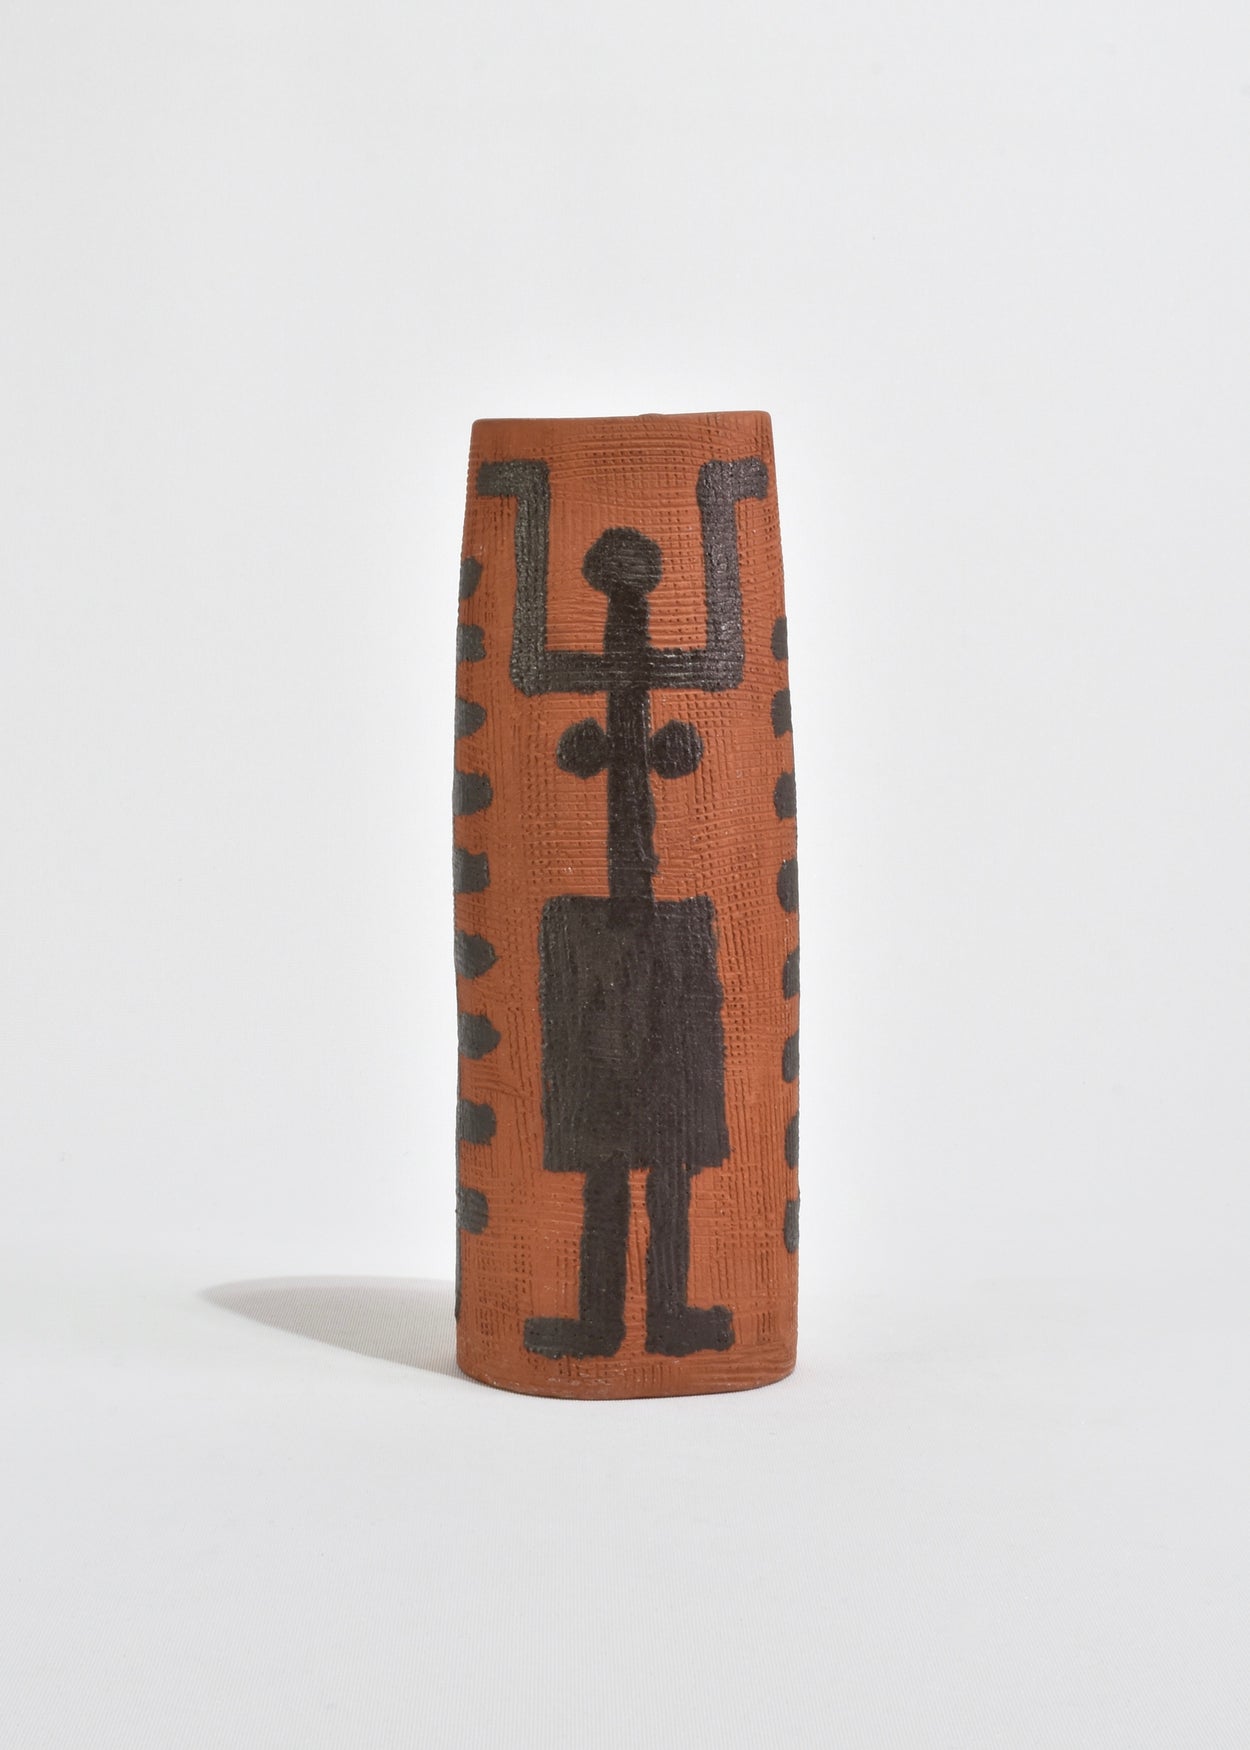 Terracotta Figure Vase